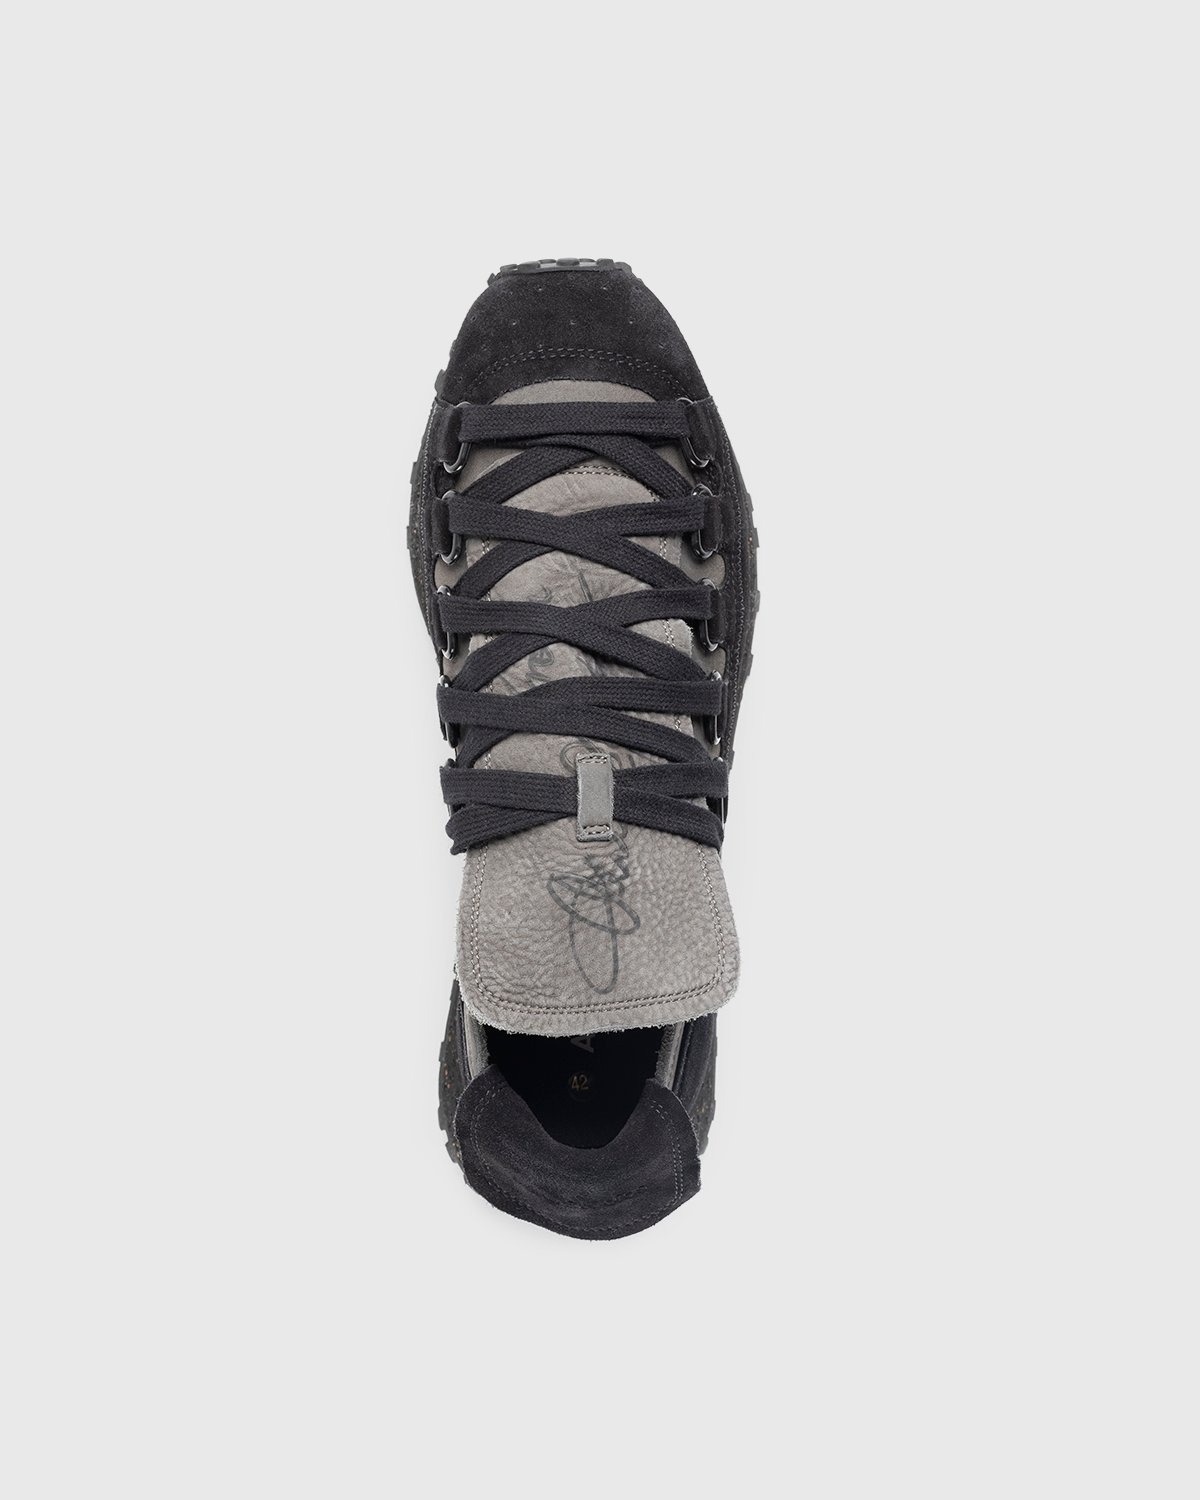 Acne Studios – Nofo Lace-Up Sneakers Grey/Black - Low Top Sneakers - Black - Image 5